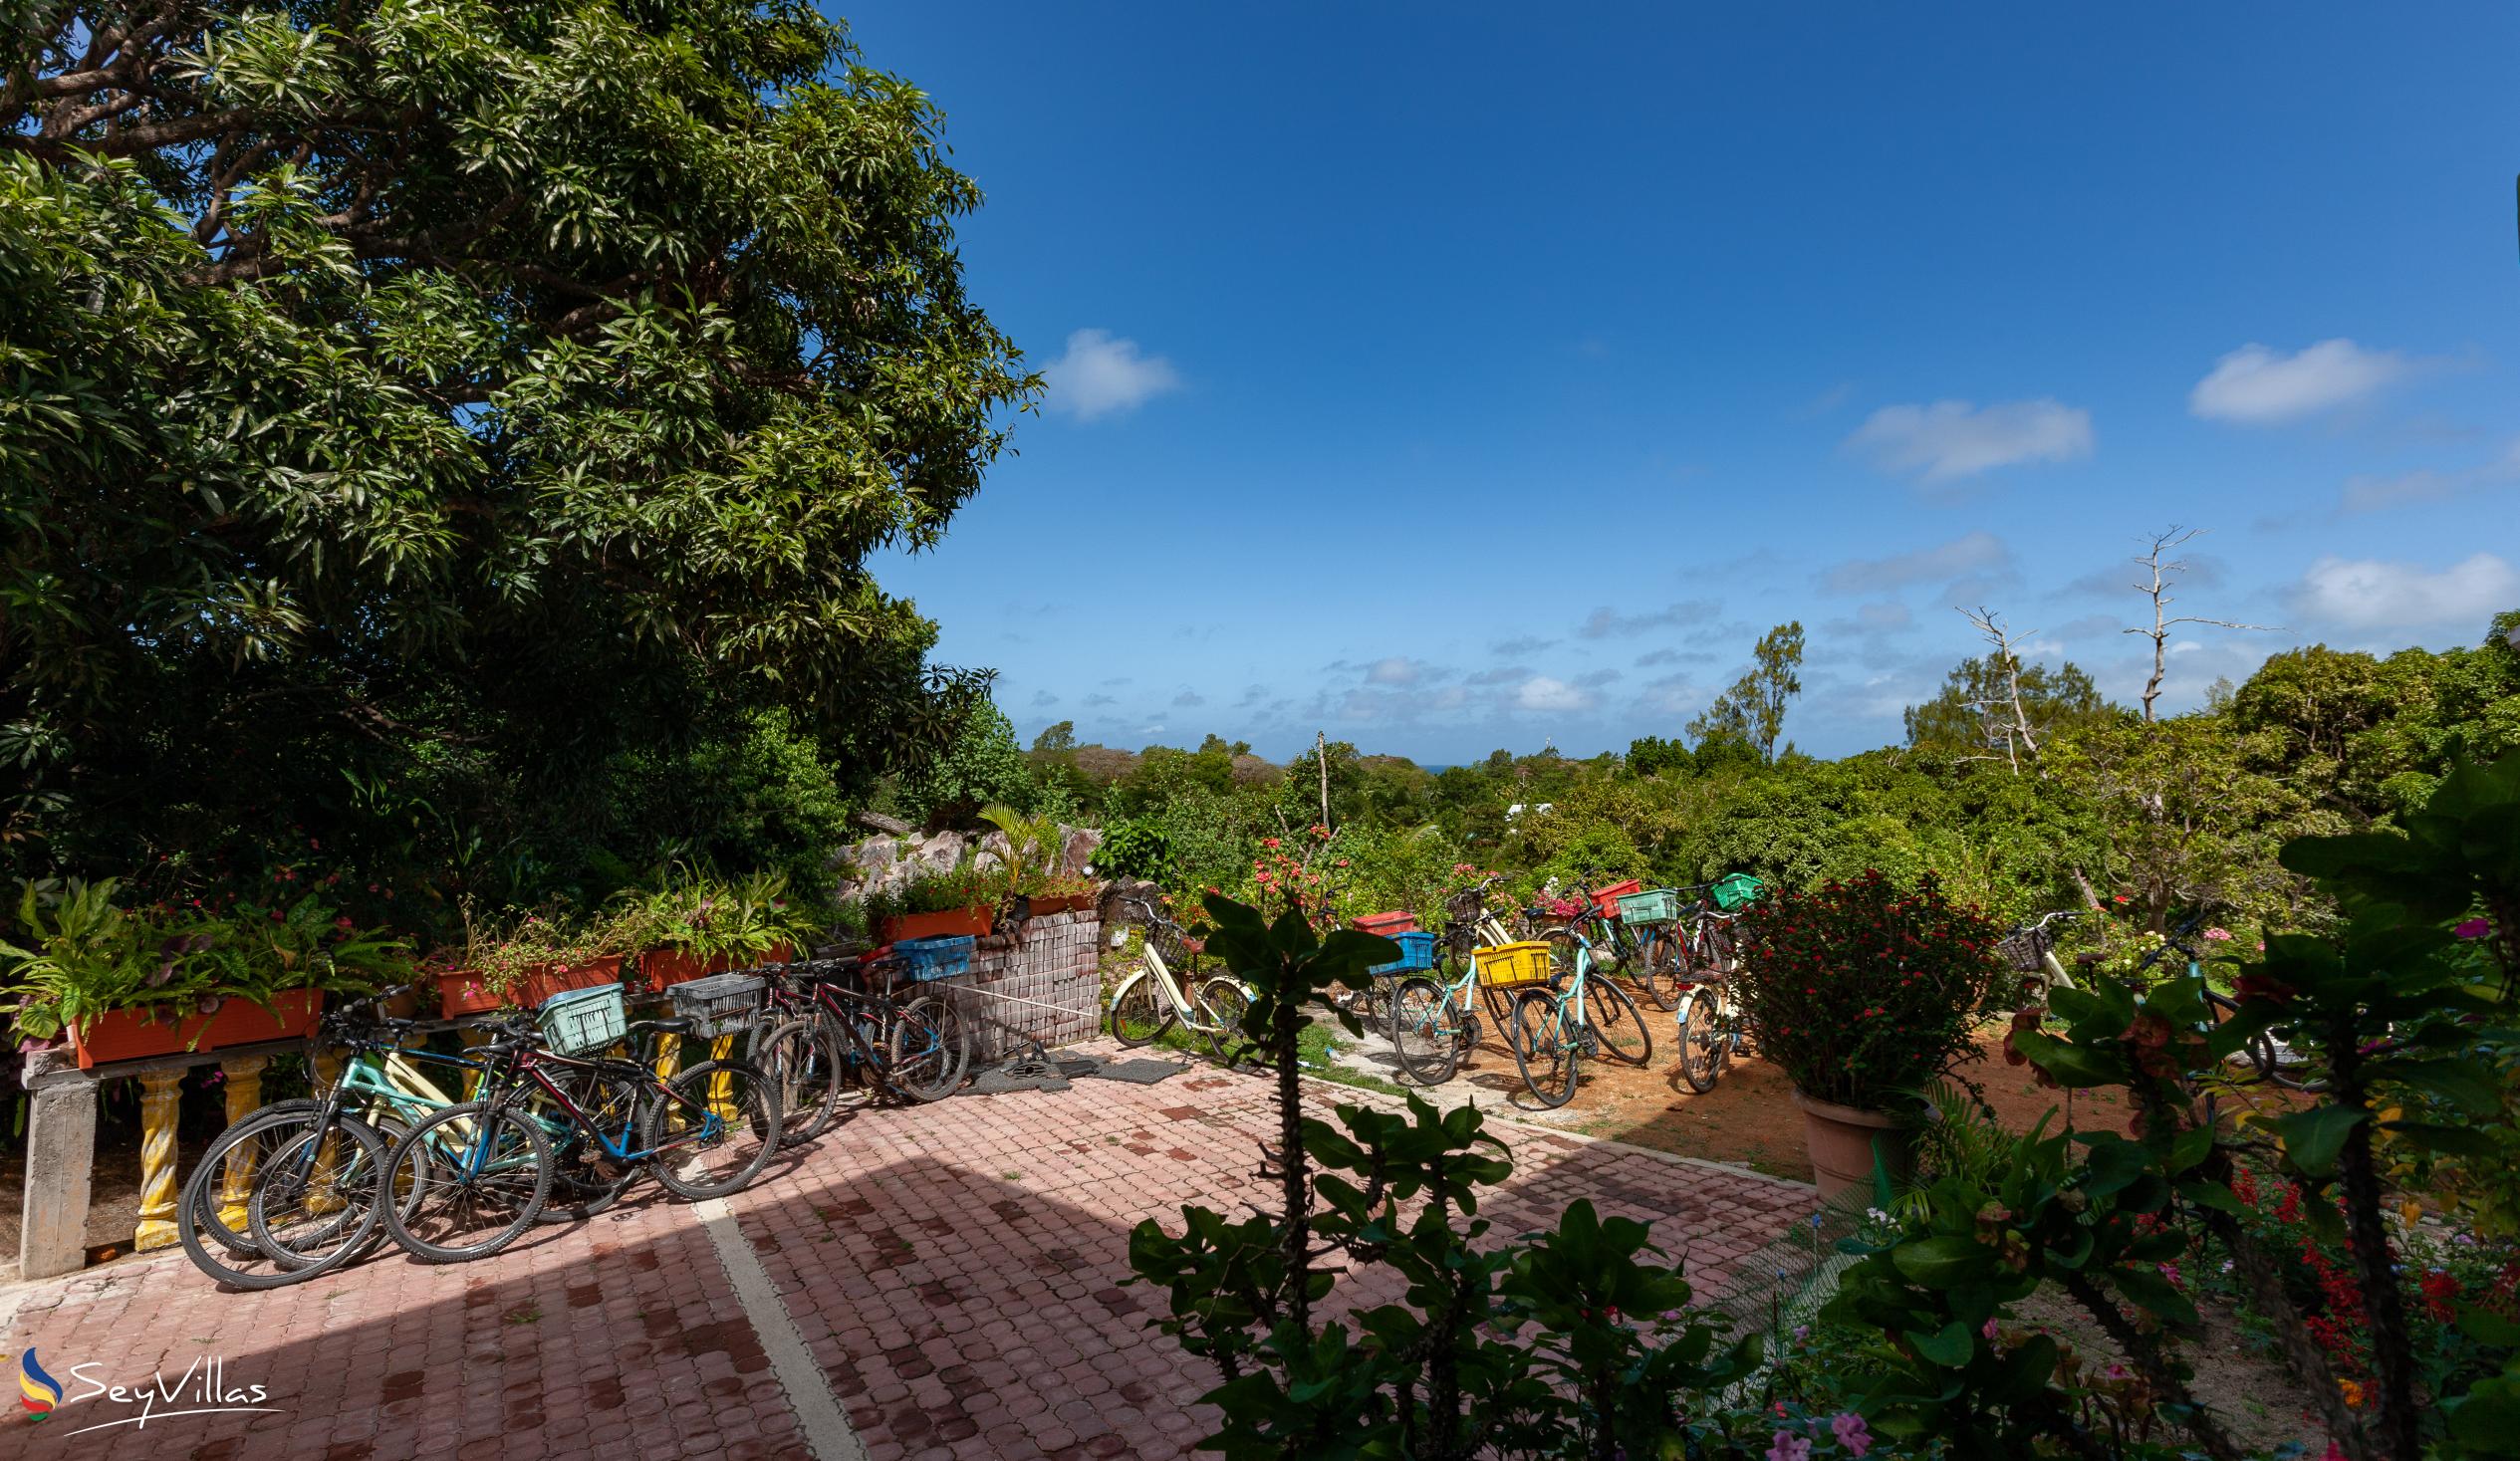 Foto 16: Villa Hortensia - Aussenbereich - La Digue (Seychellen)